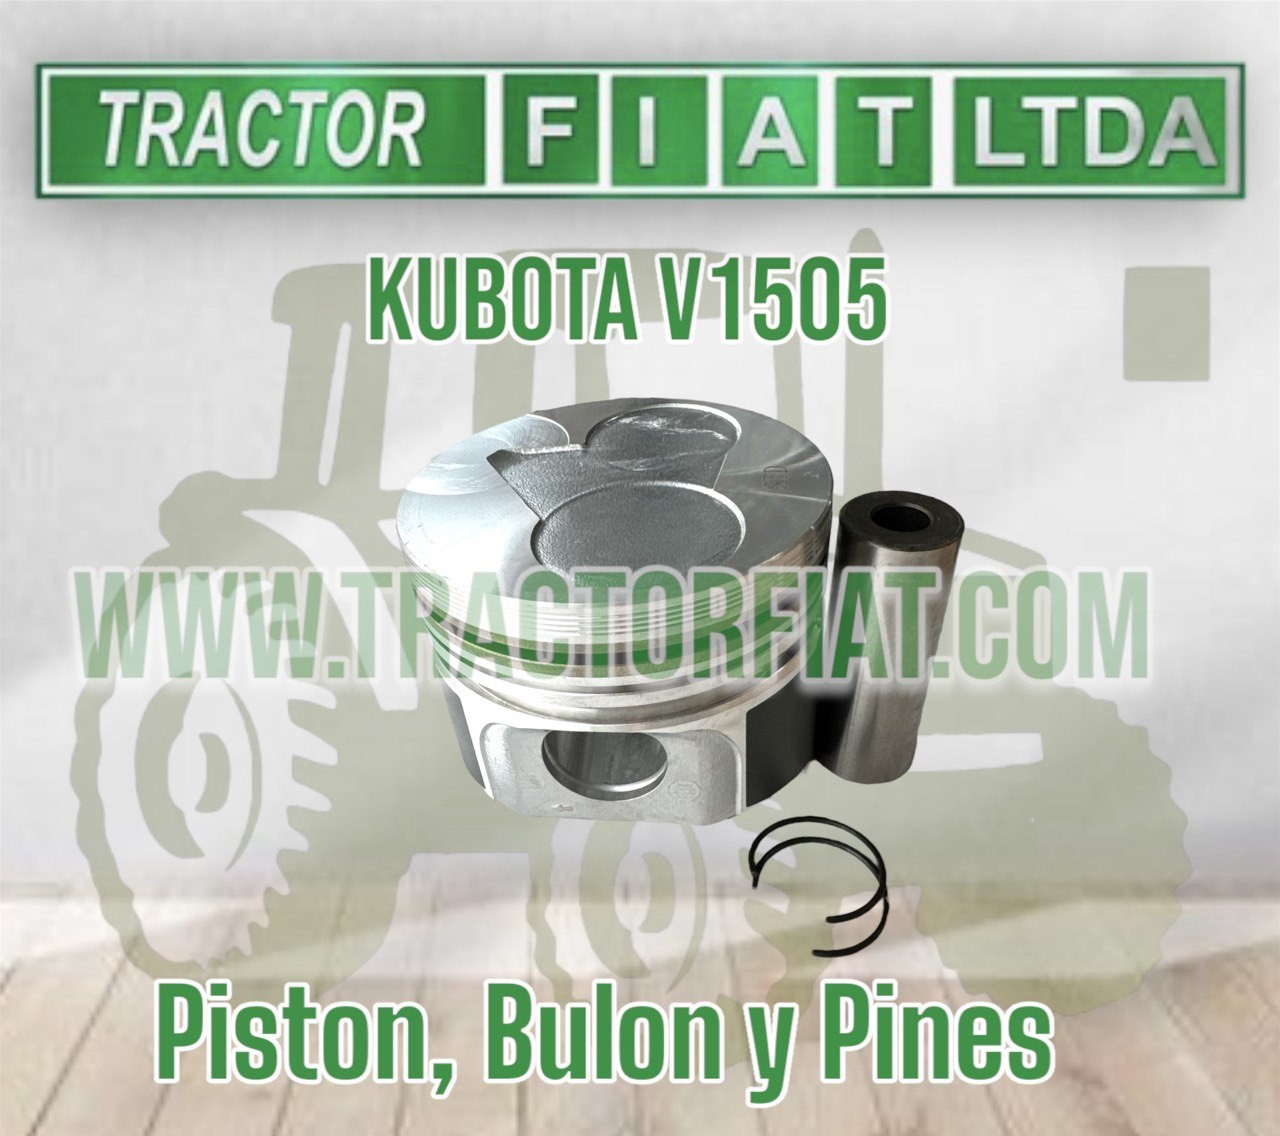 PISTON, BULON Y PINES - MOTOR KUBOTA V1505